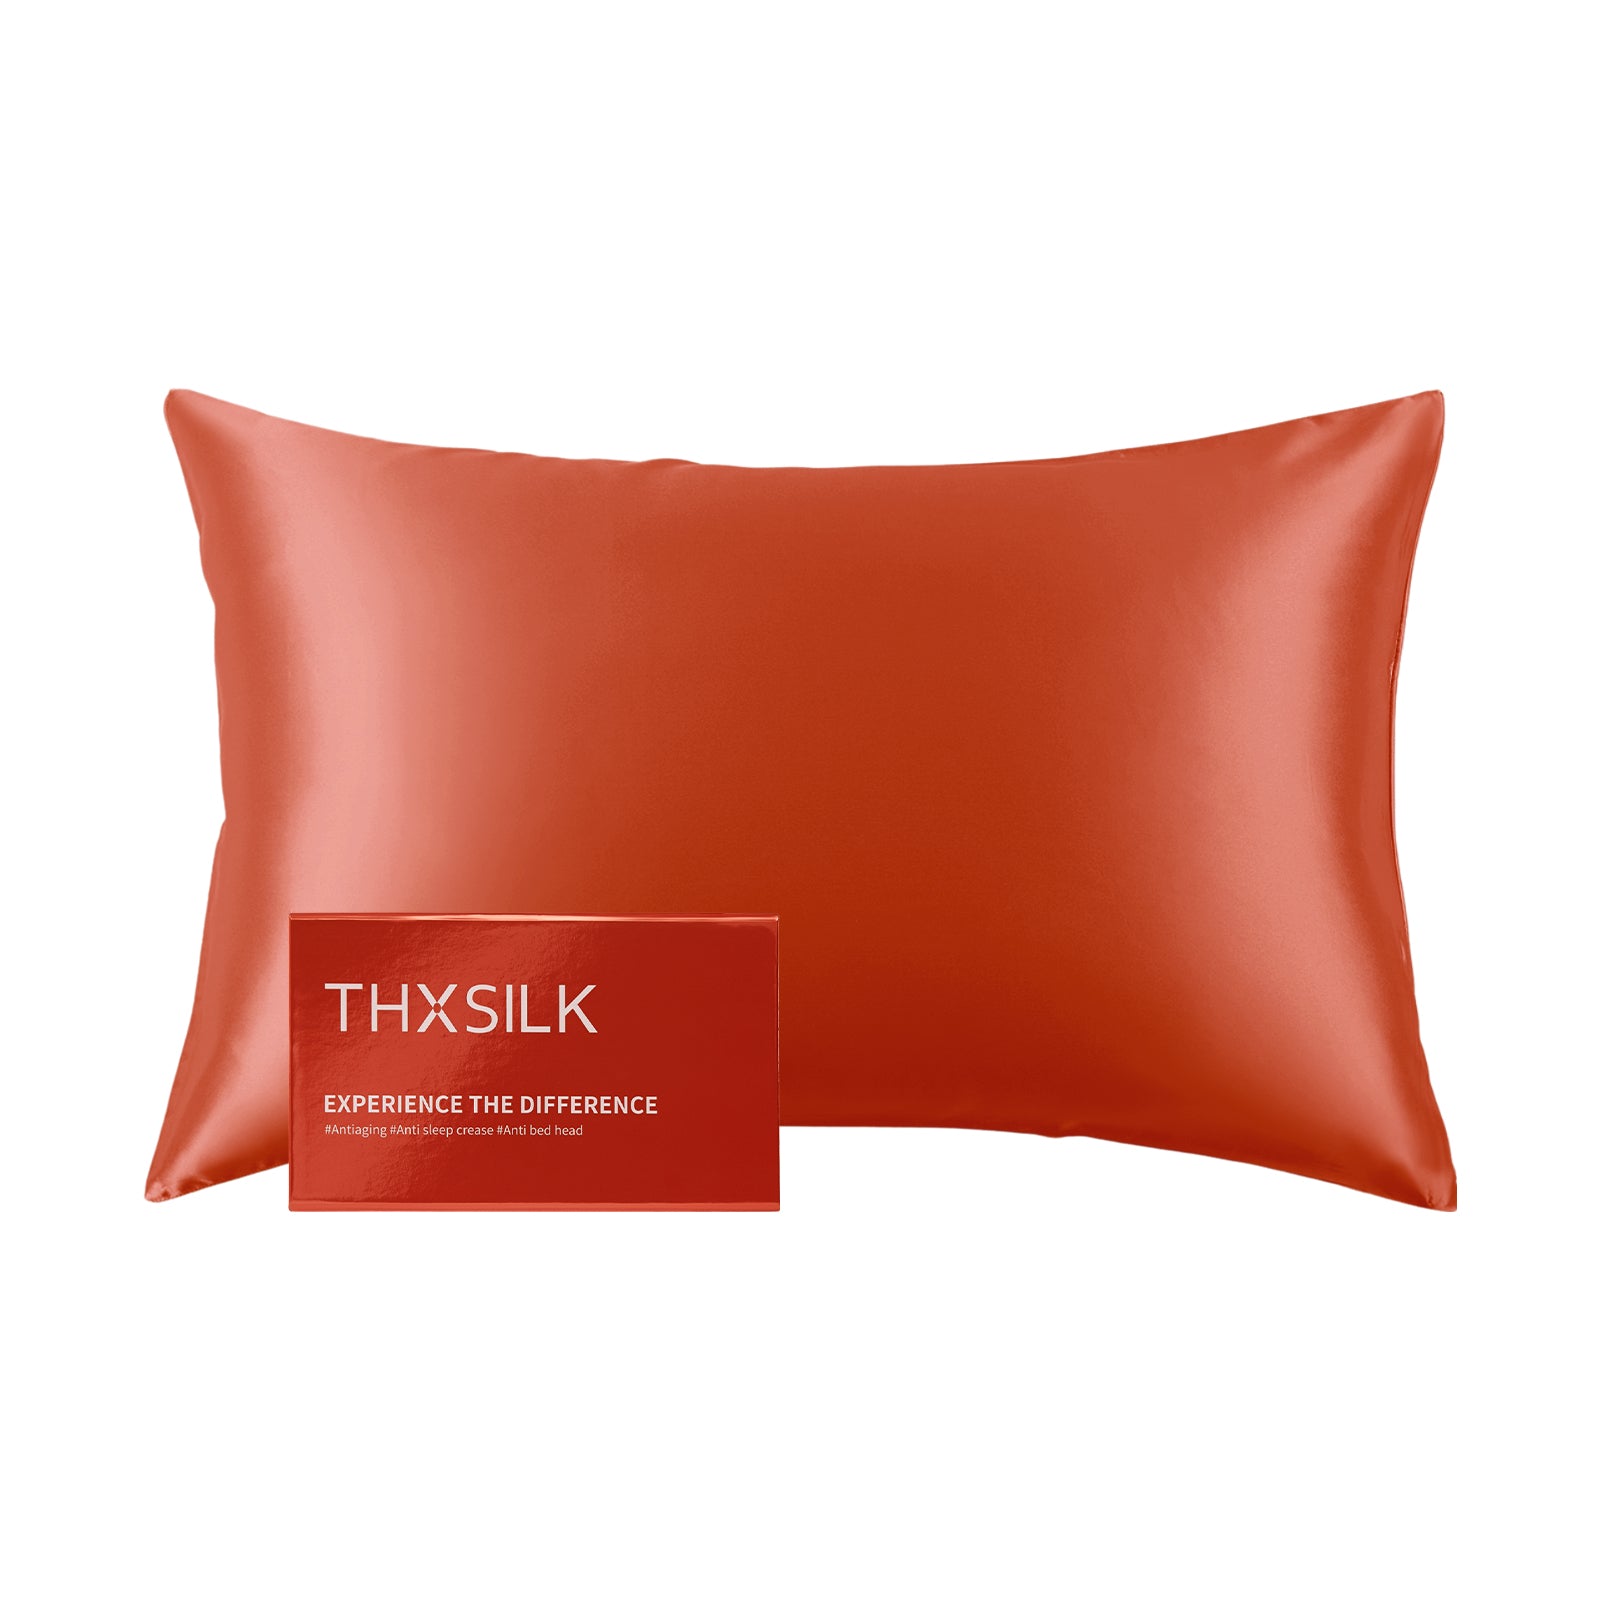 Mulberry Silk Pillowcase – The Ethical Silk Company Ltd